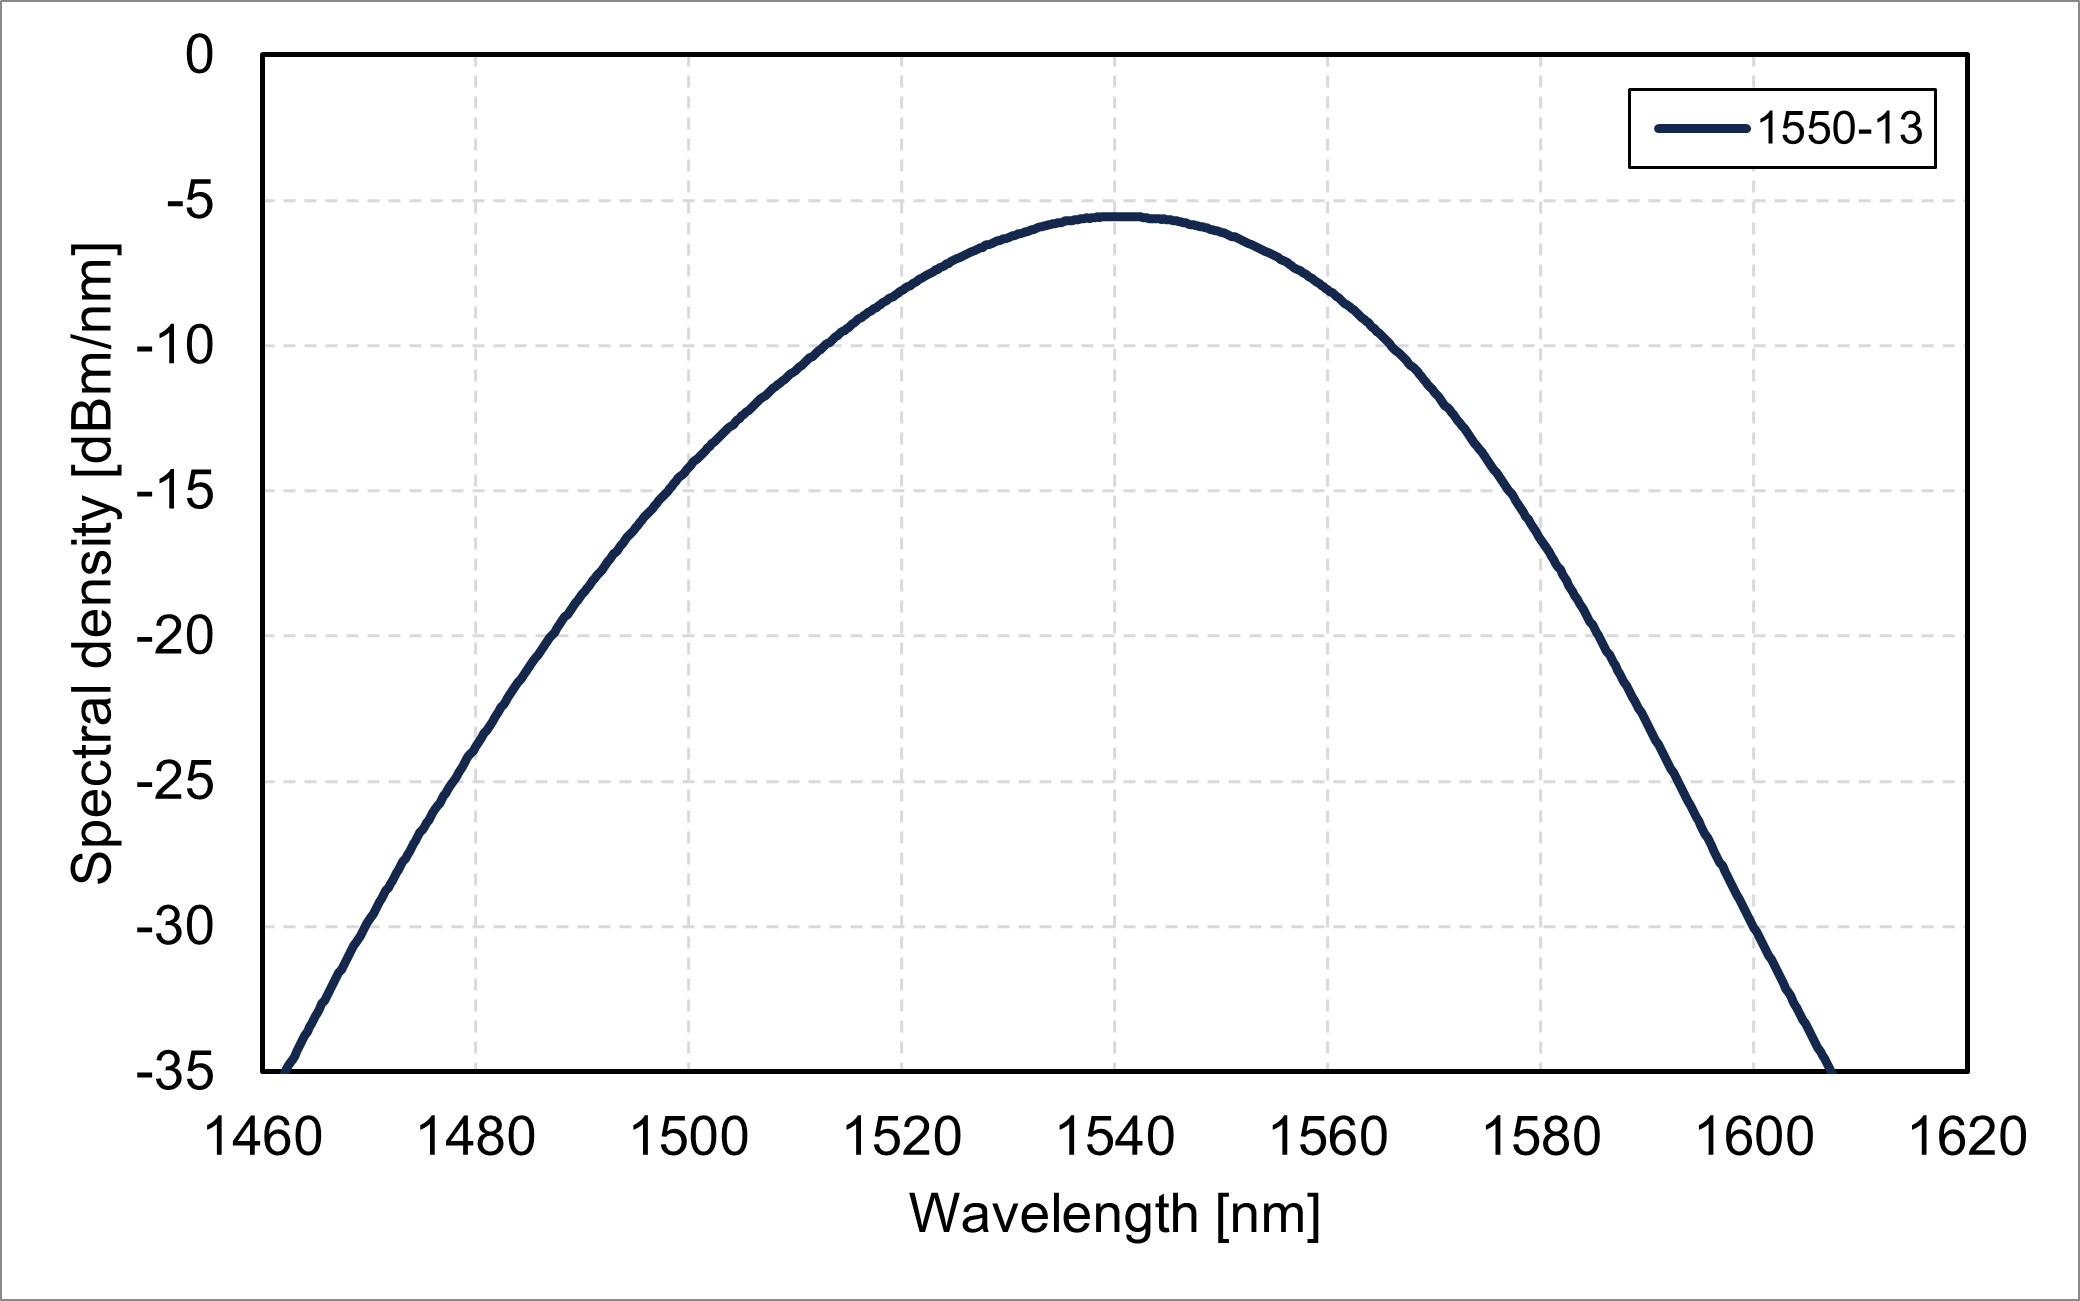 Spectral density vs. wavelength (1550-13)